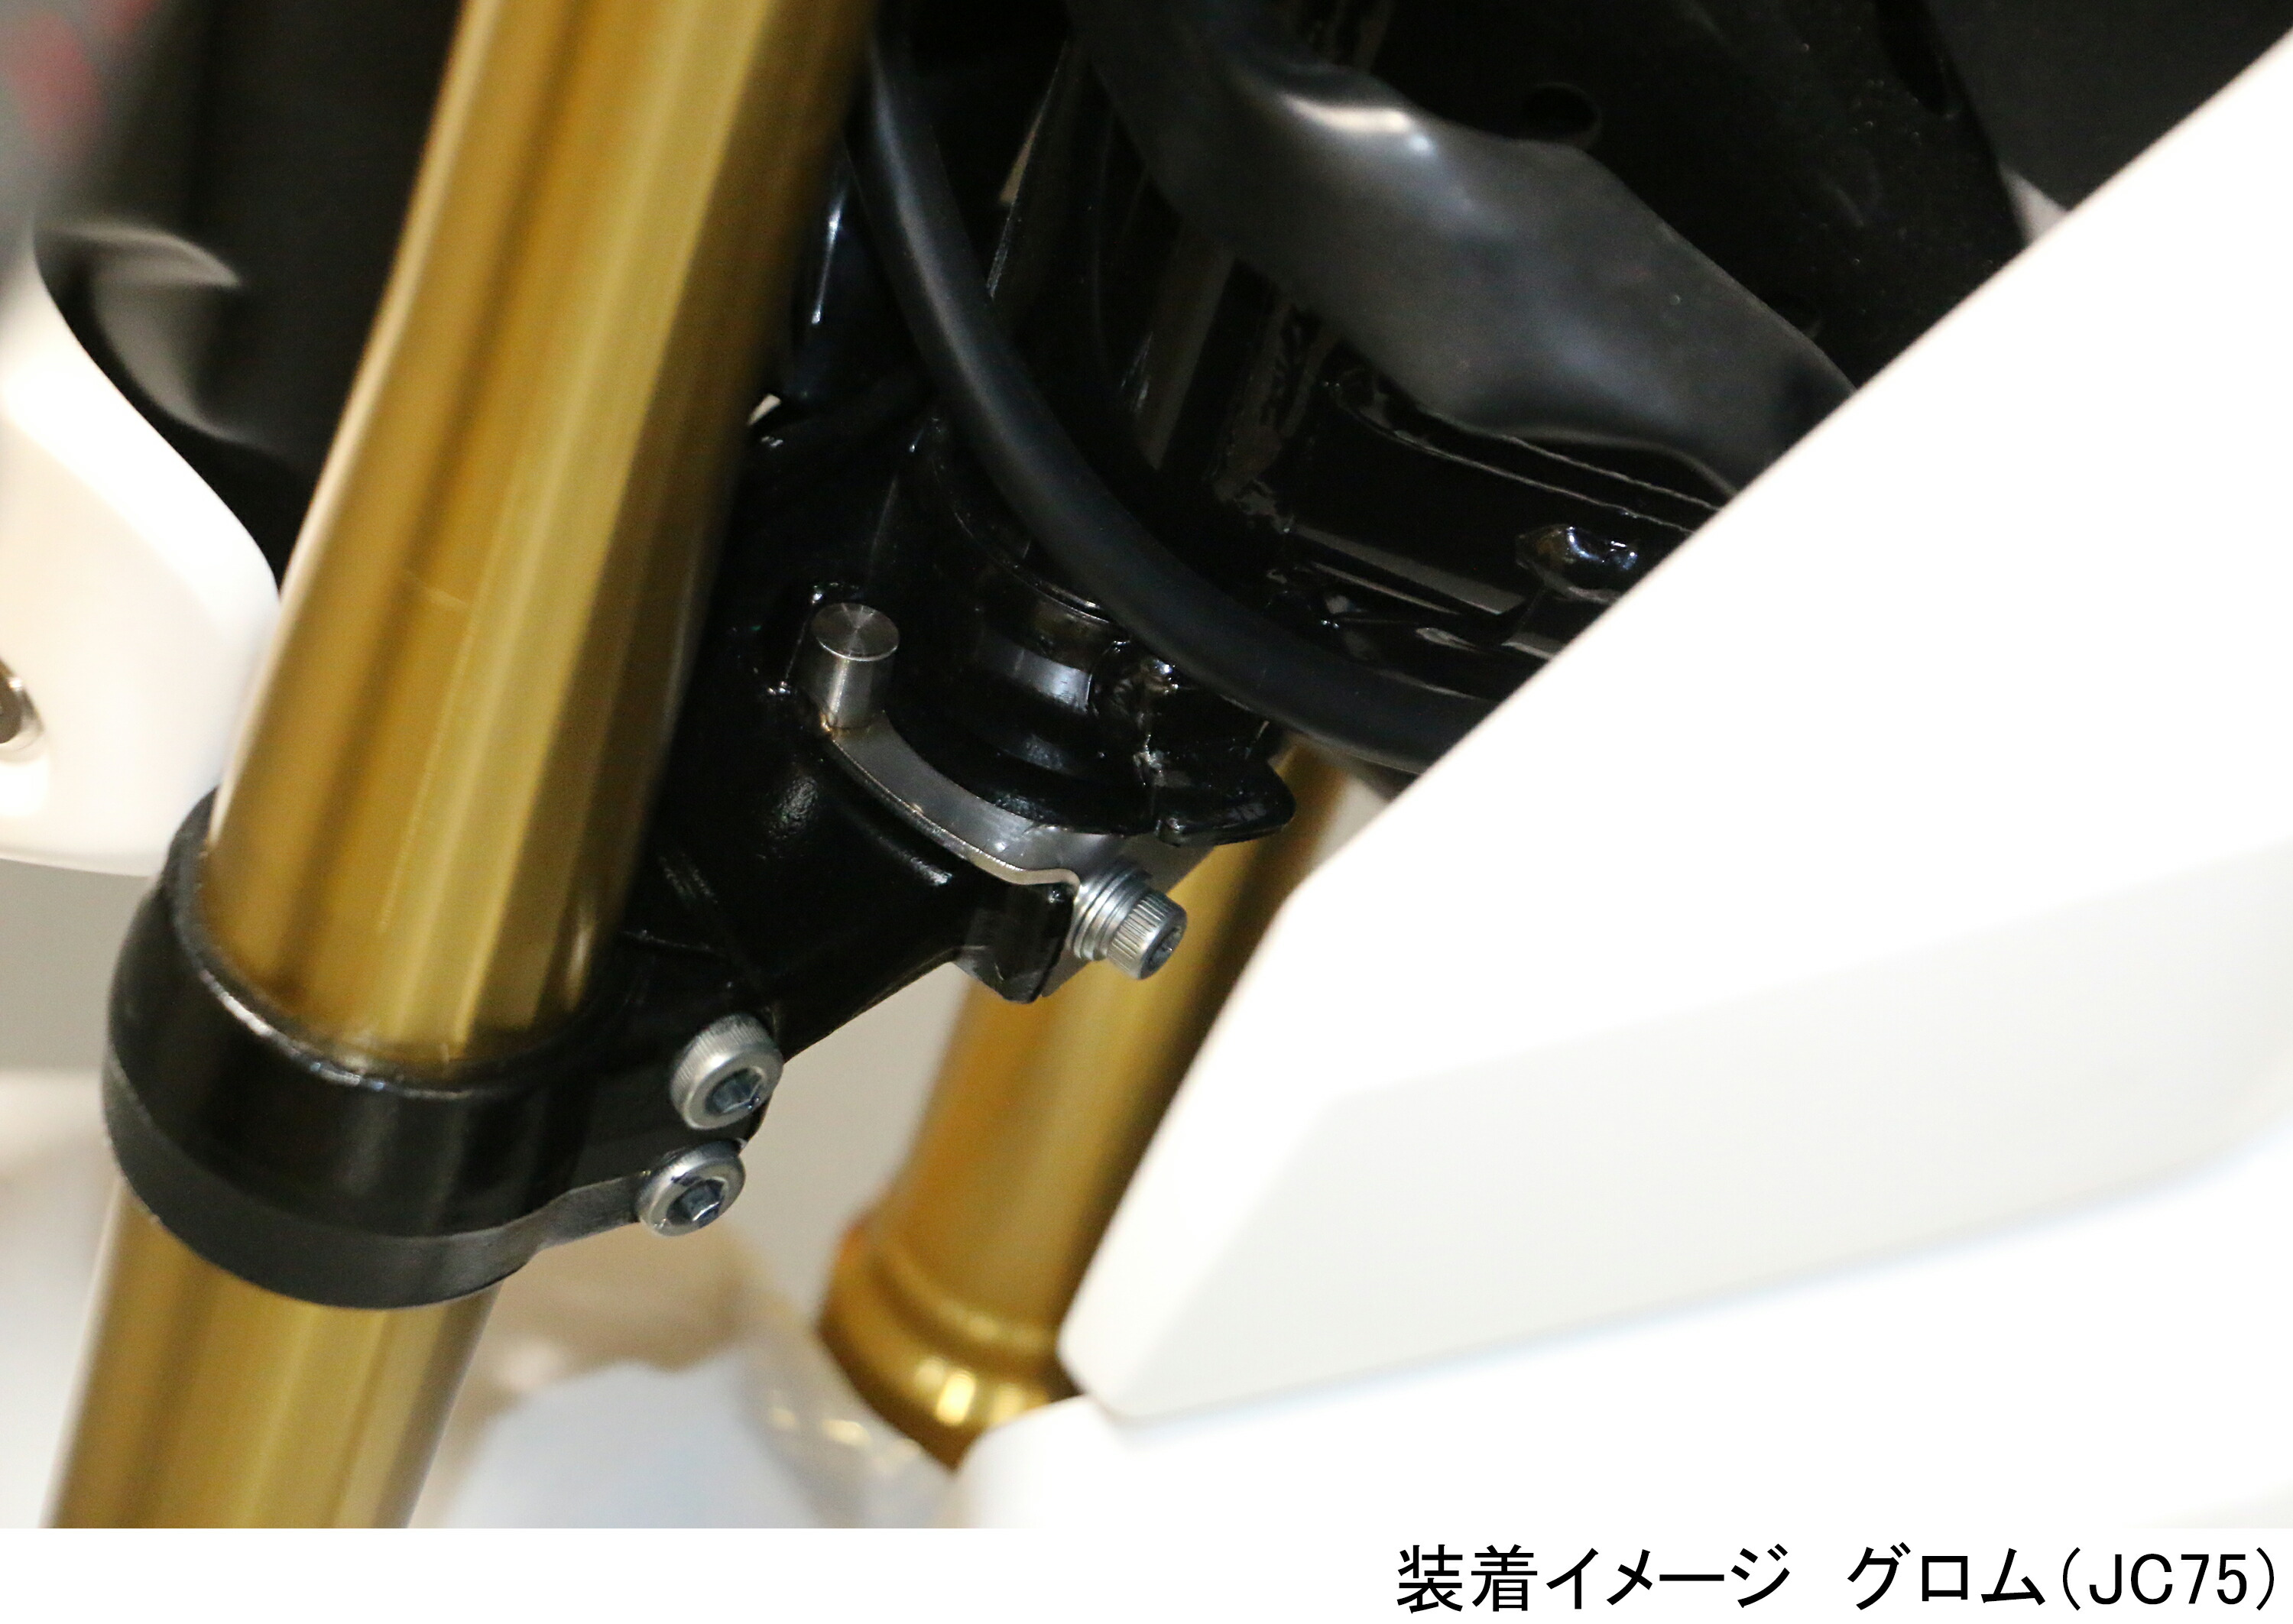 KITACO Kitaco мотоцикл руль для стопор Glo m(JC61/JC75/JC92)*-20 HRC Glo m(GROM4)*21- HRC Glo m(GROM5) 560-1432010